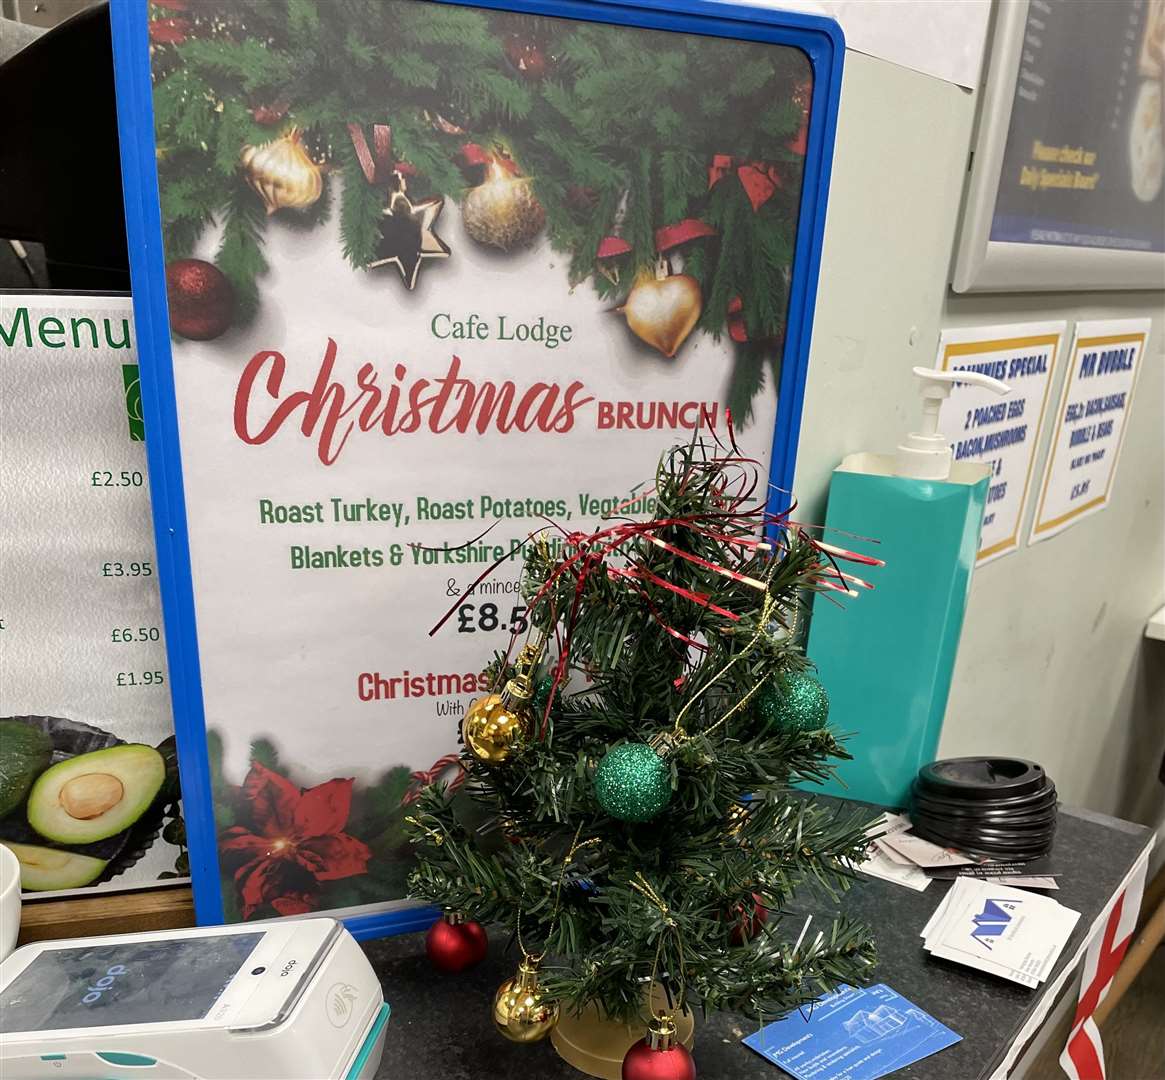 The Christmas menu included a whole roast or wrap